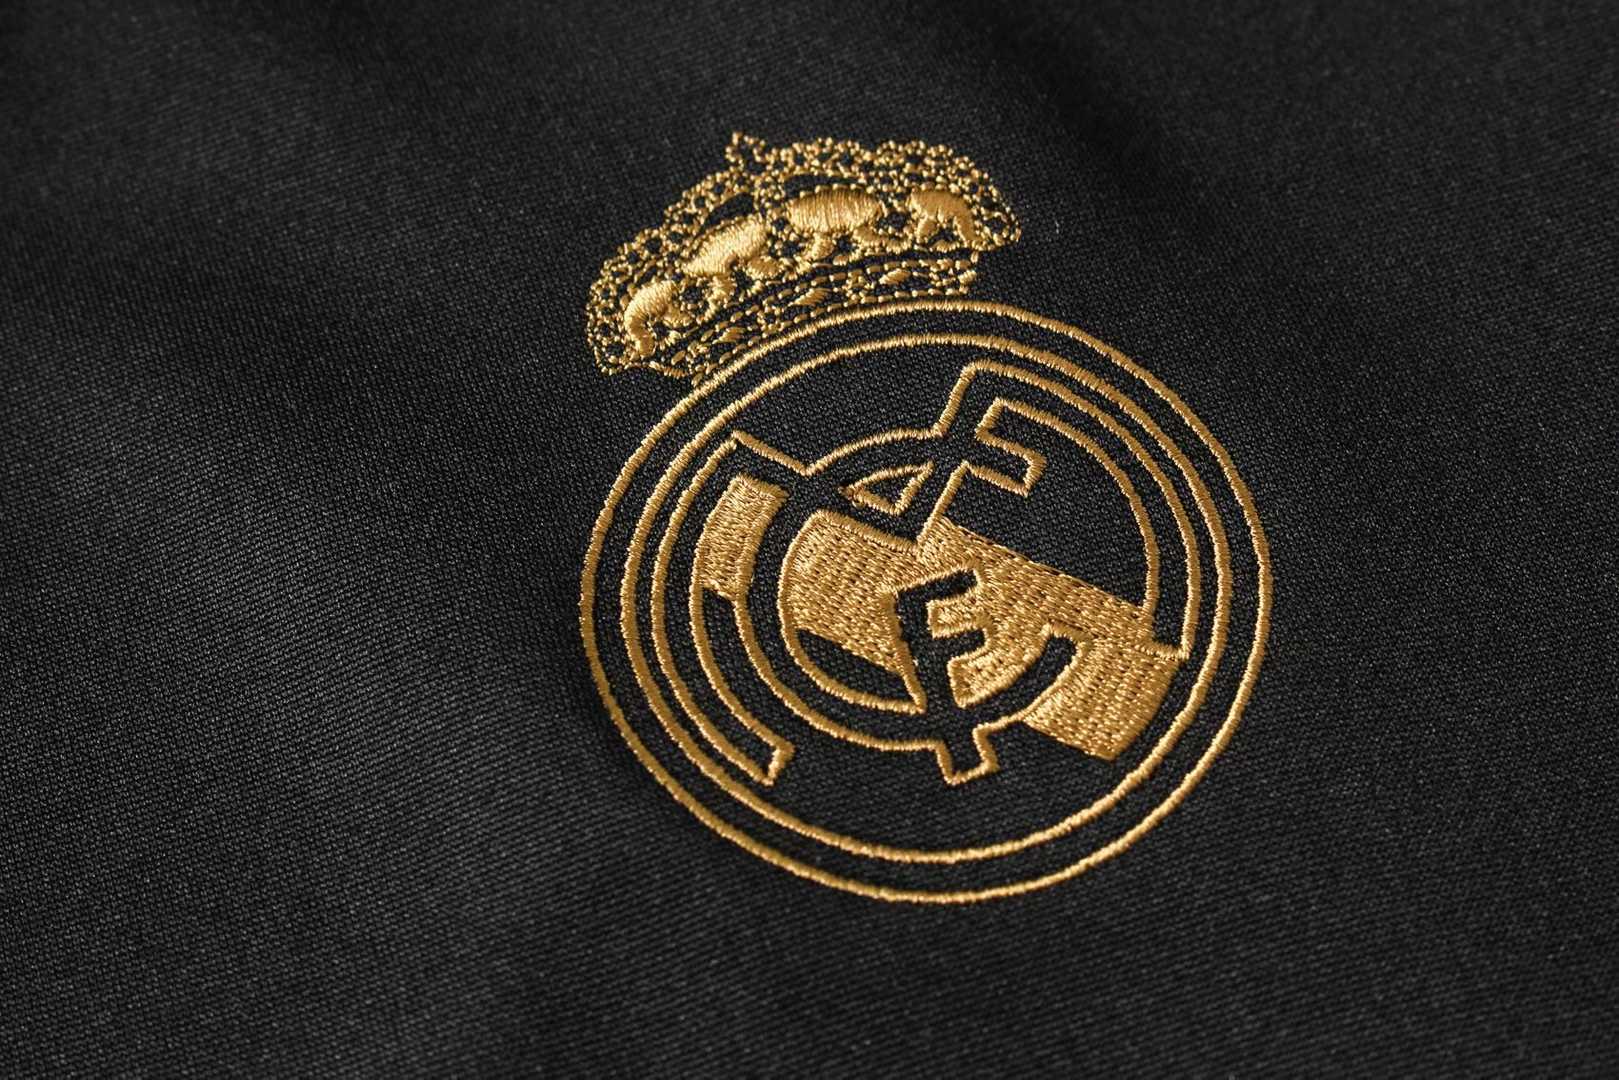 2019/20 Real Madrid High Neck Black Mens Soccer Training Suit(Jacket + Pants)